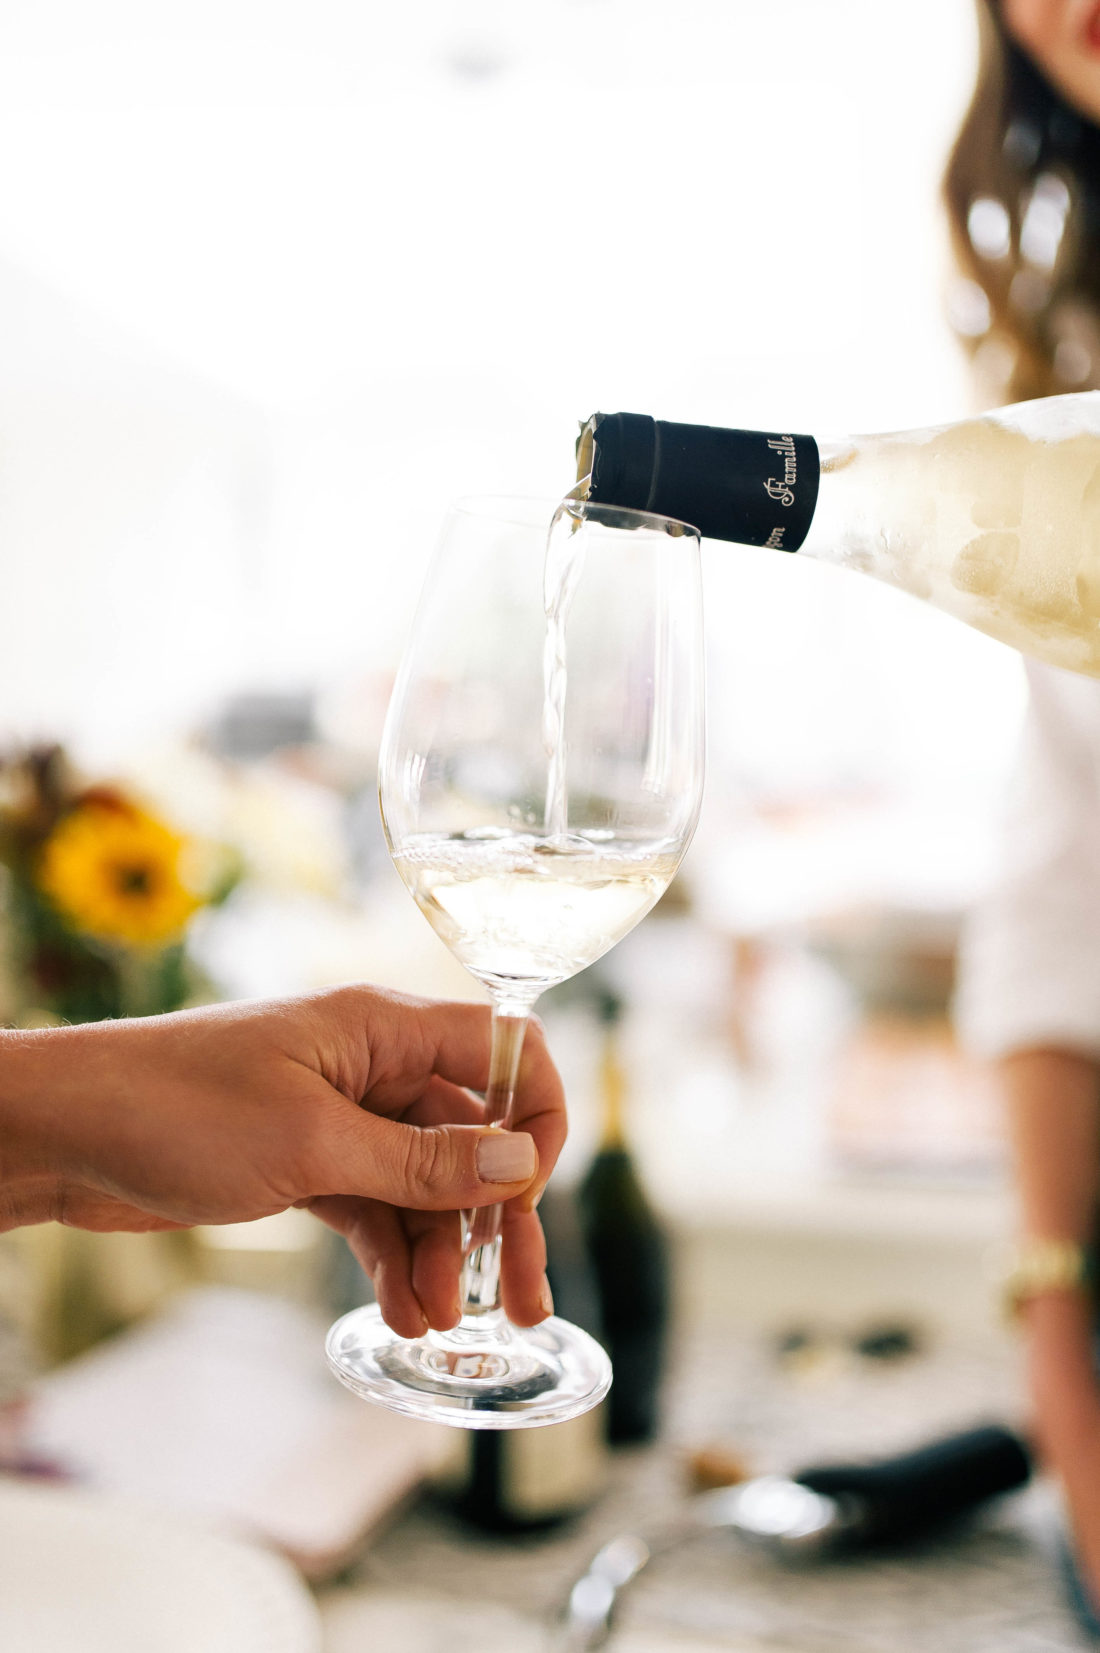 A glass of white wine is poured at Eva Amurri Martino's Connecticut home